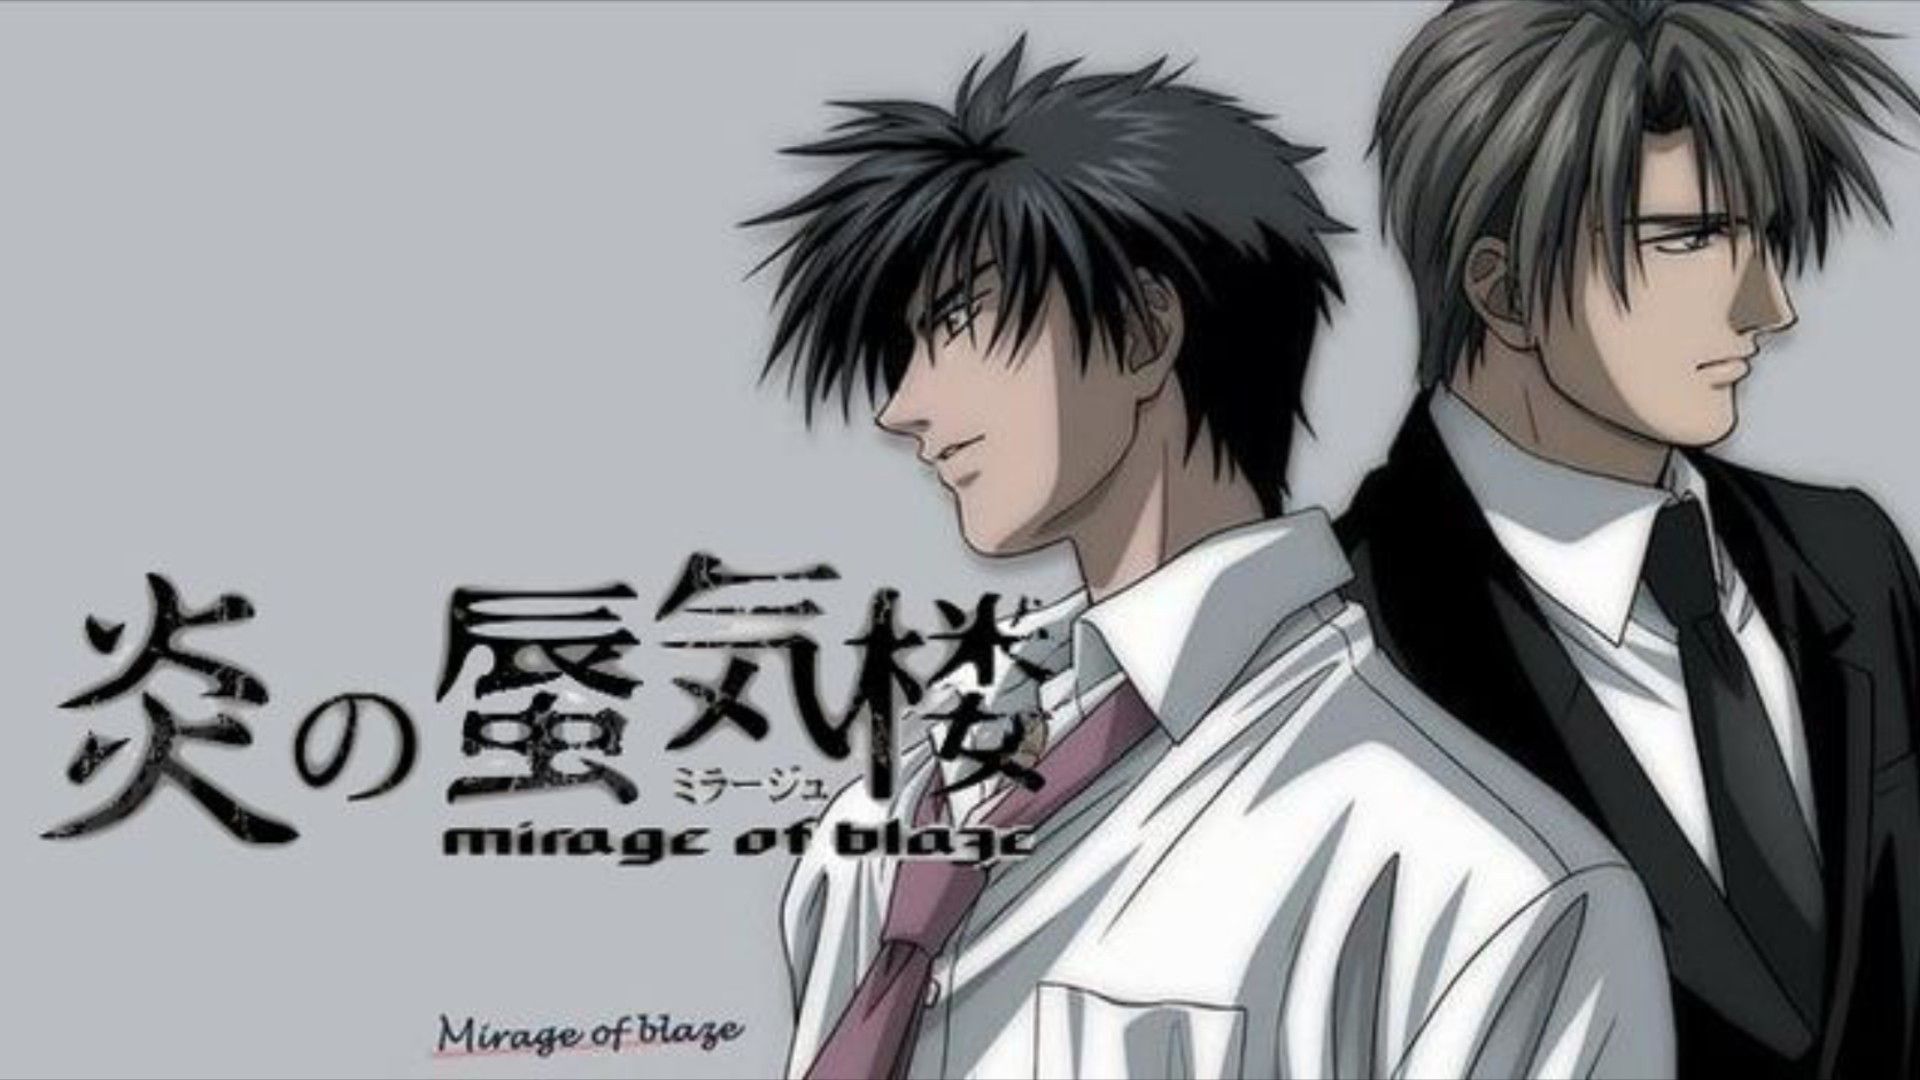 Honoo no Mirage 炎の蜃気楼 [ミラージュ] Mirage of Blaze 2002